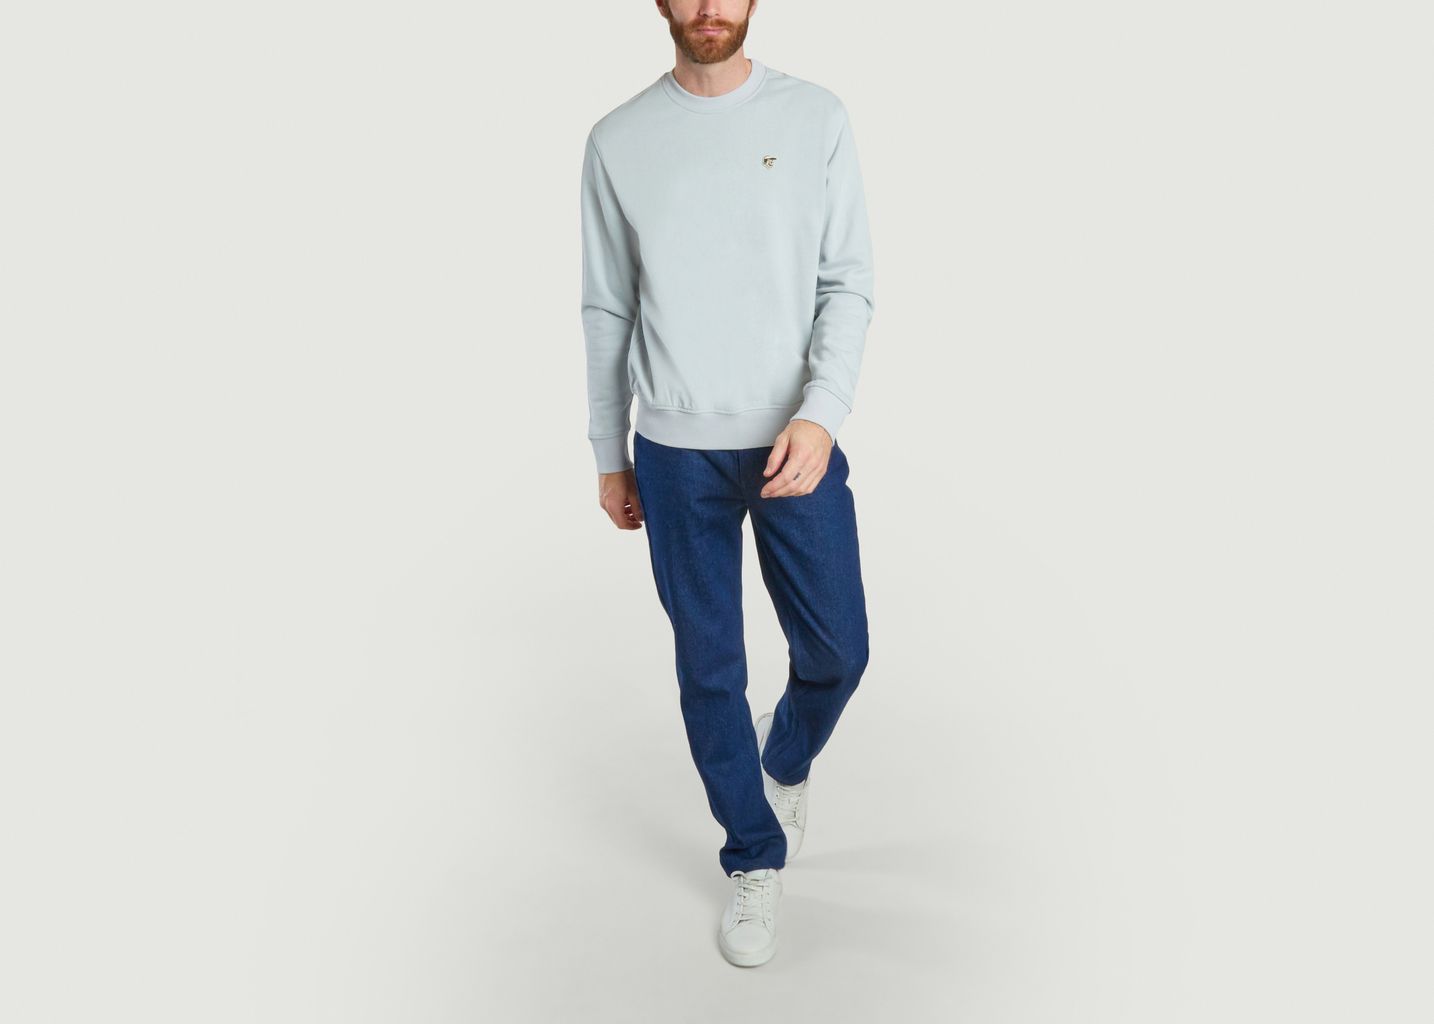 Sweatshirt Emilio - Pompeii Brand